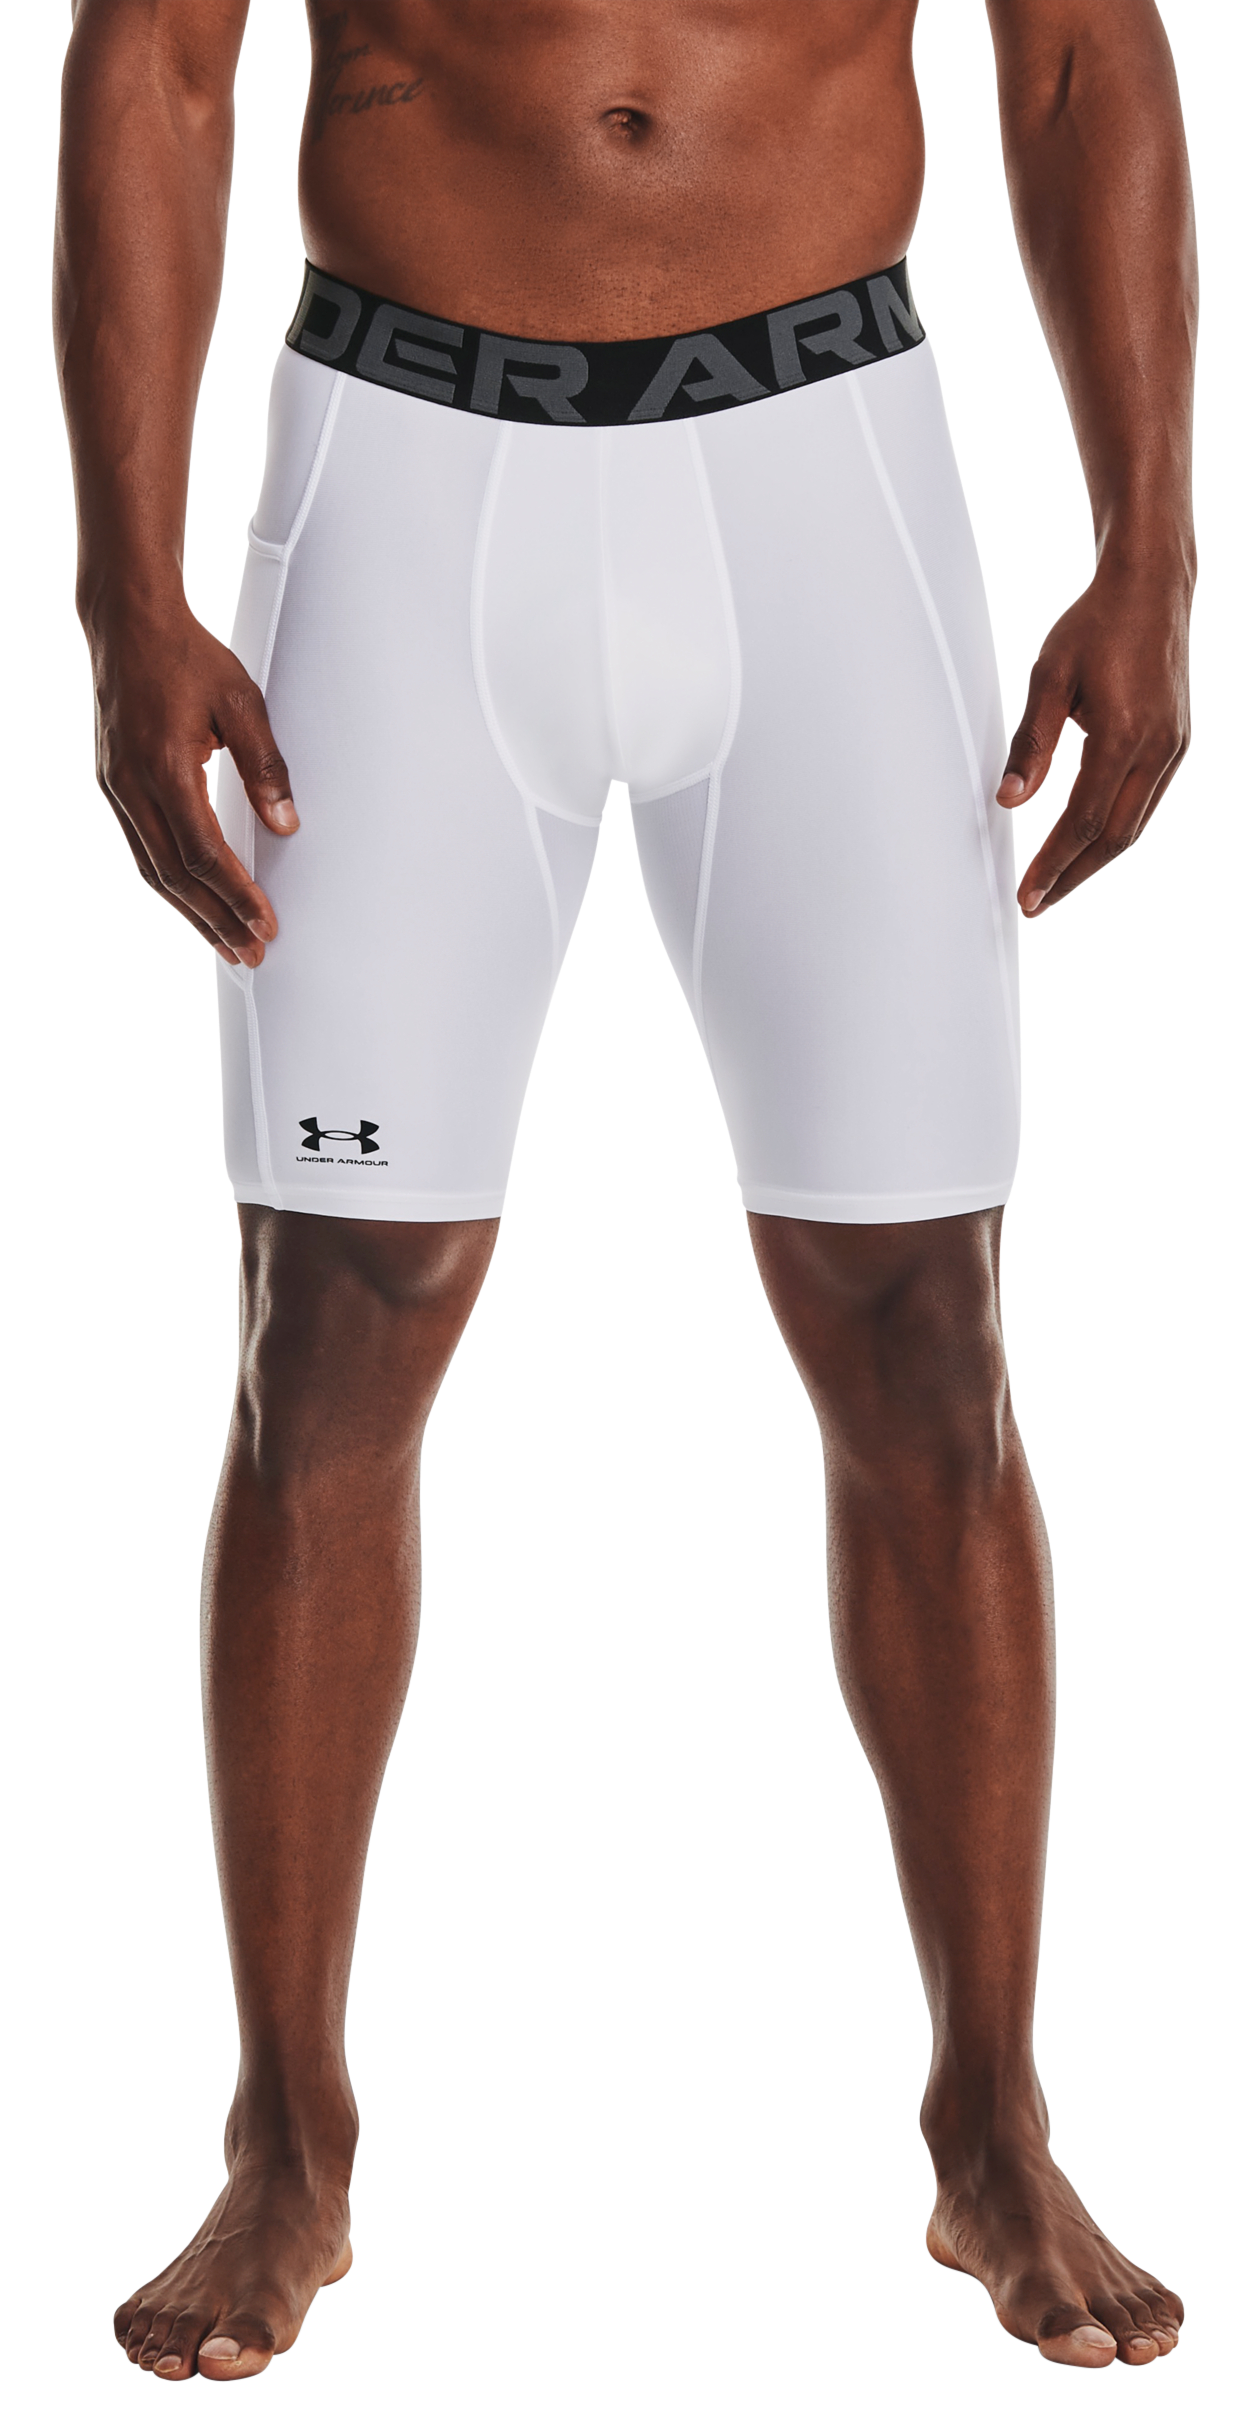 Under Armour HeatGear Pocket Long Shorts for Men - White/Black - MT